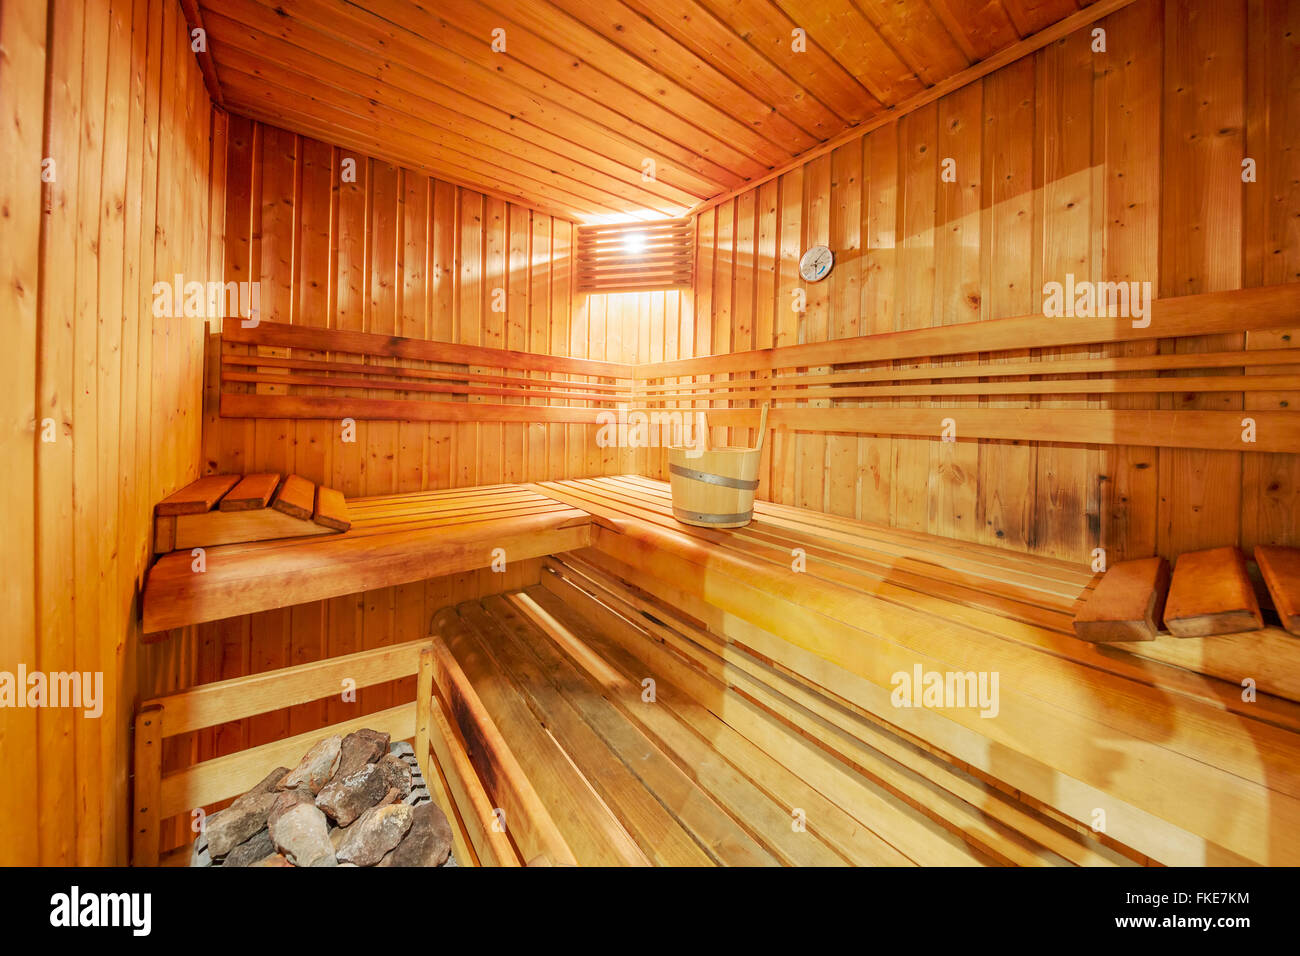 classic wooden sauna interior Stock Photo